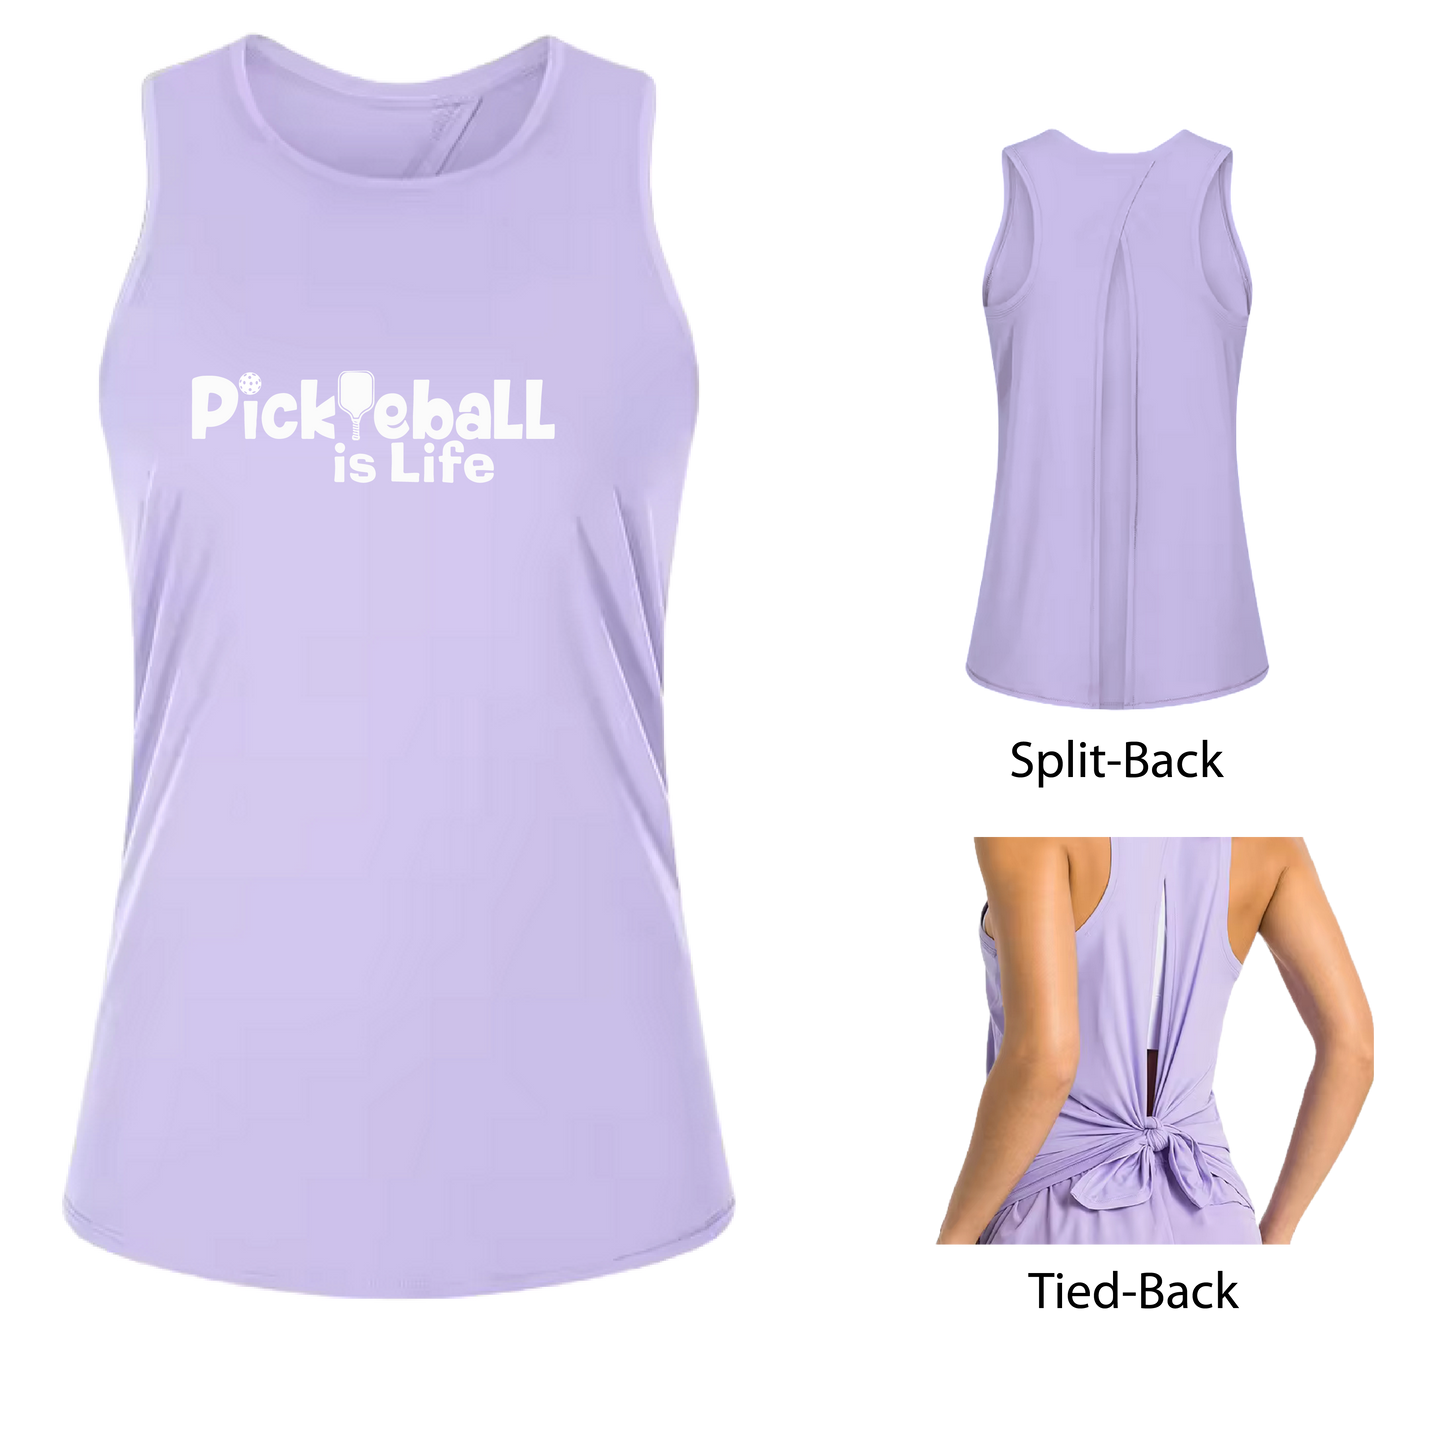 Pickleball is Life | Women's Split Back or Tied Back Pickleball Tank | 80/20 Nylon Spandex Mix